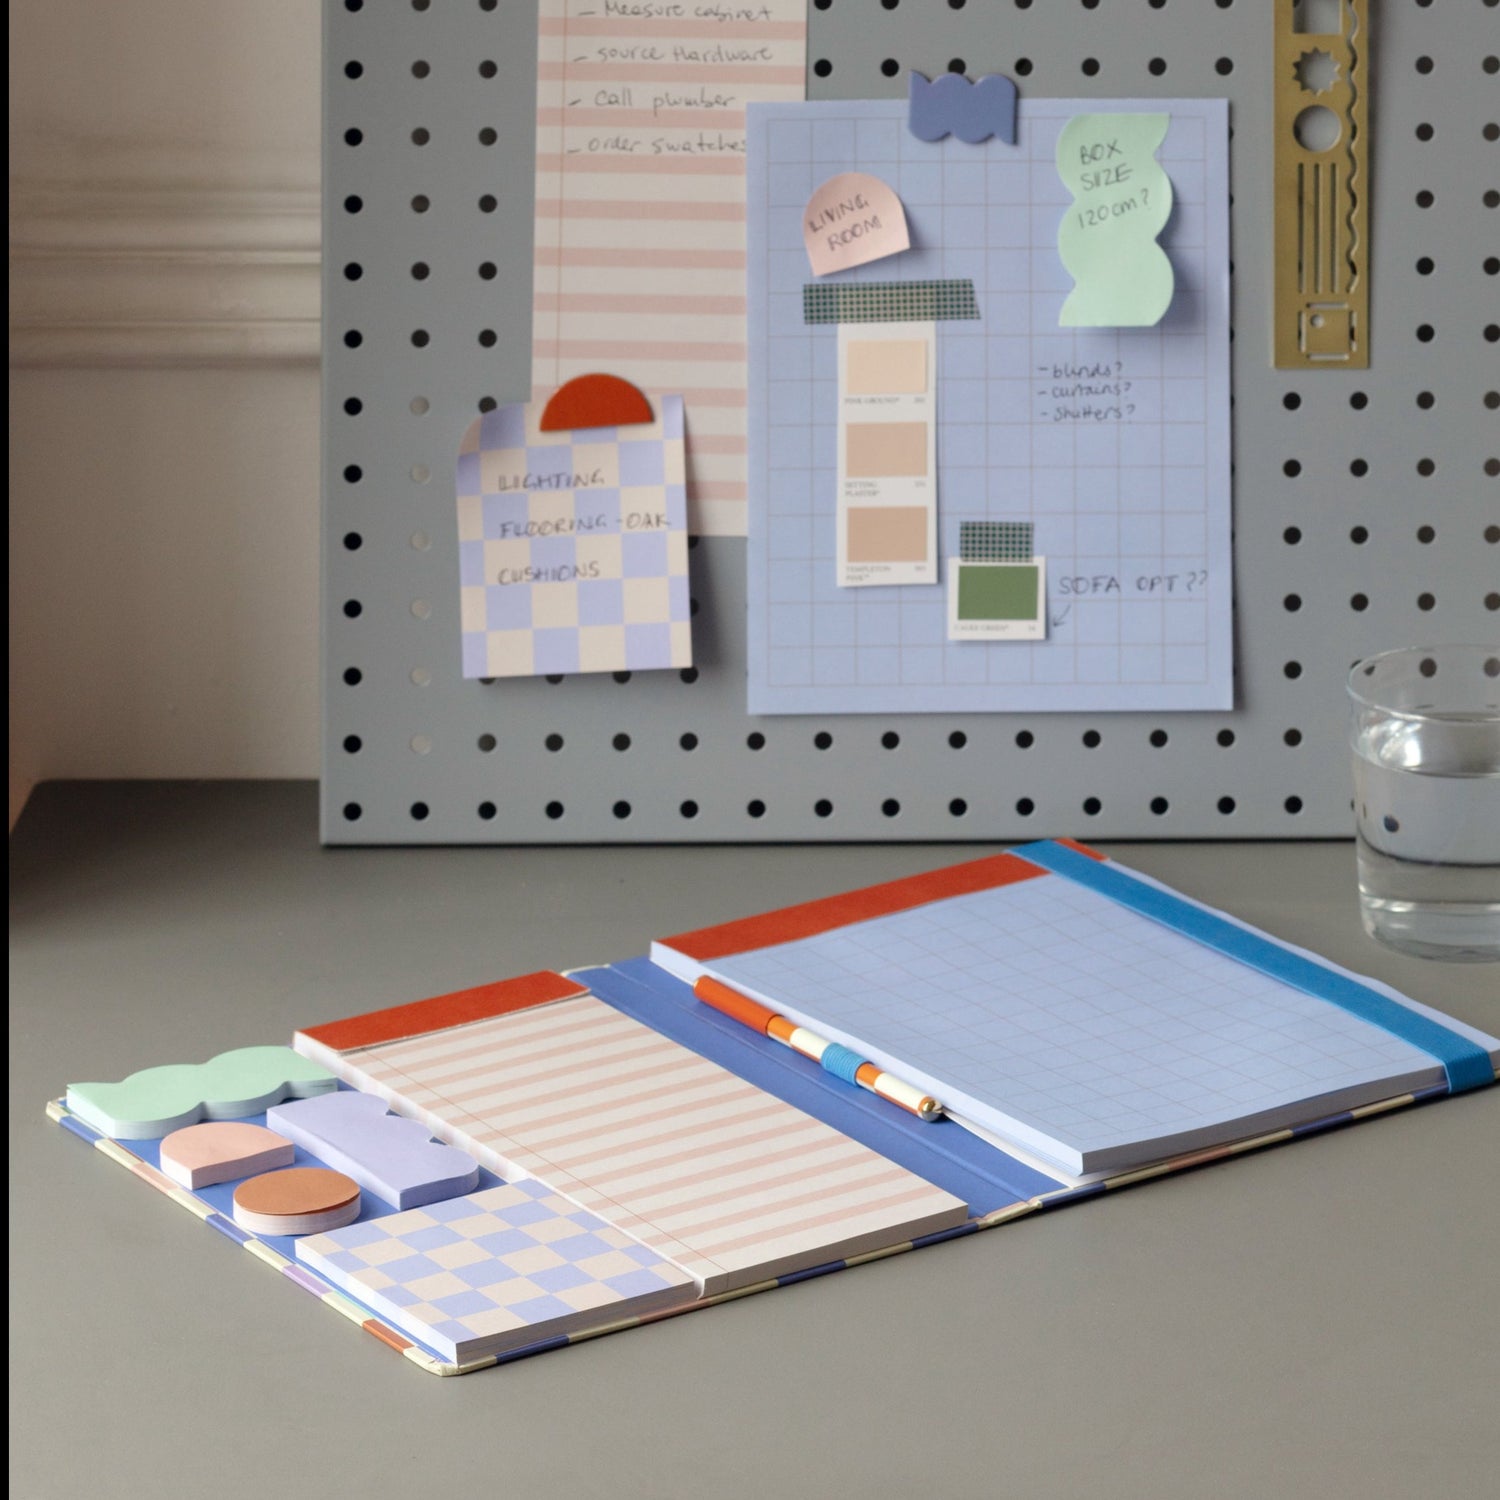 Inkerie Magnetic Dry Erase List Memo Board – Kikkerland Design Inc